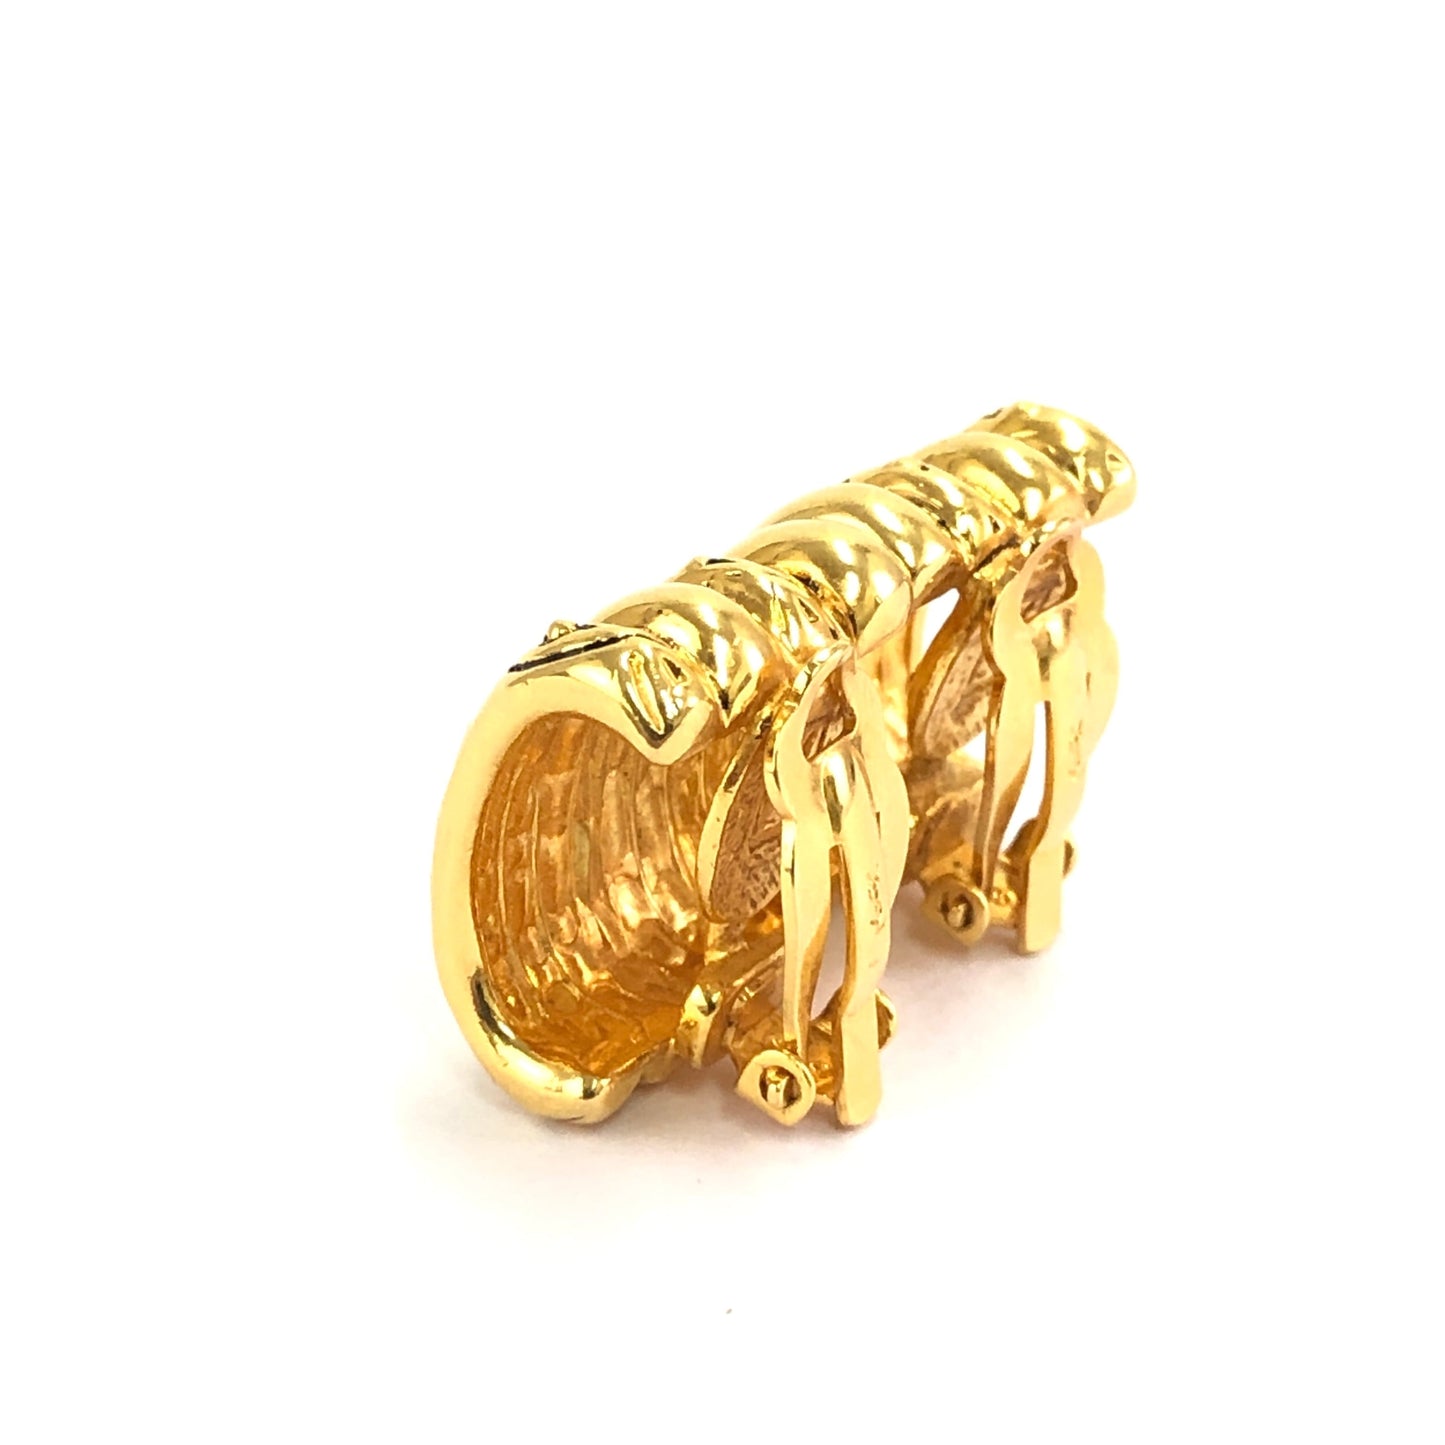 Yves Saint Laurent antique earrings gold vintage old accessories cb2him